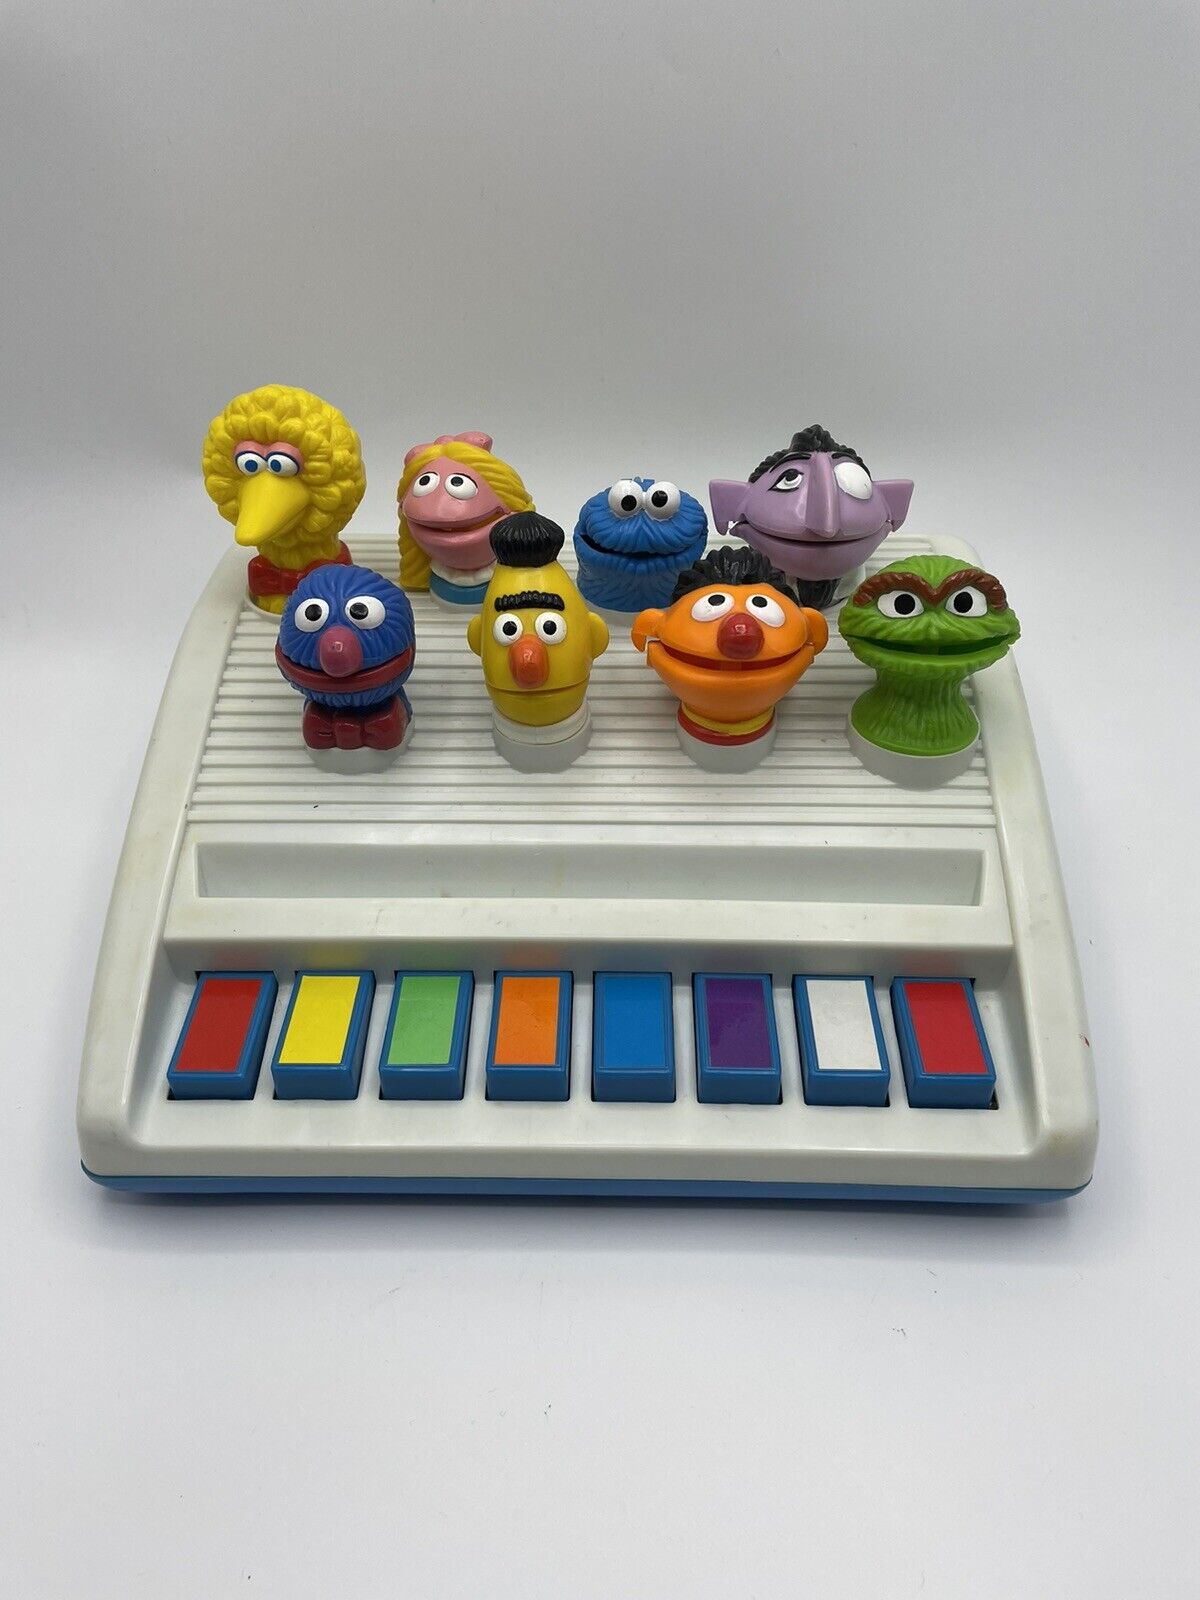 Vintage Sesame Street Toy SINGERS by LEWCO 3550 1988 Tested And Works